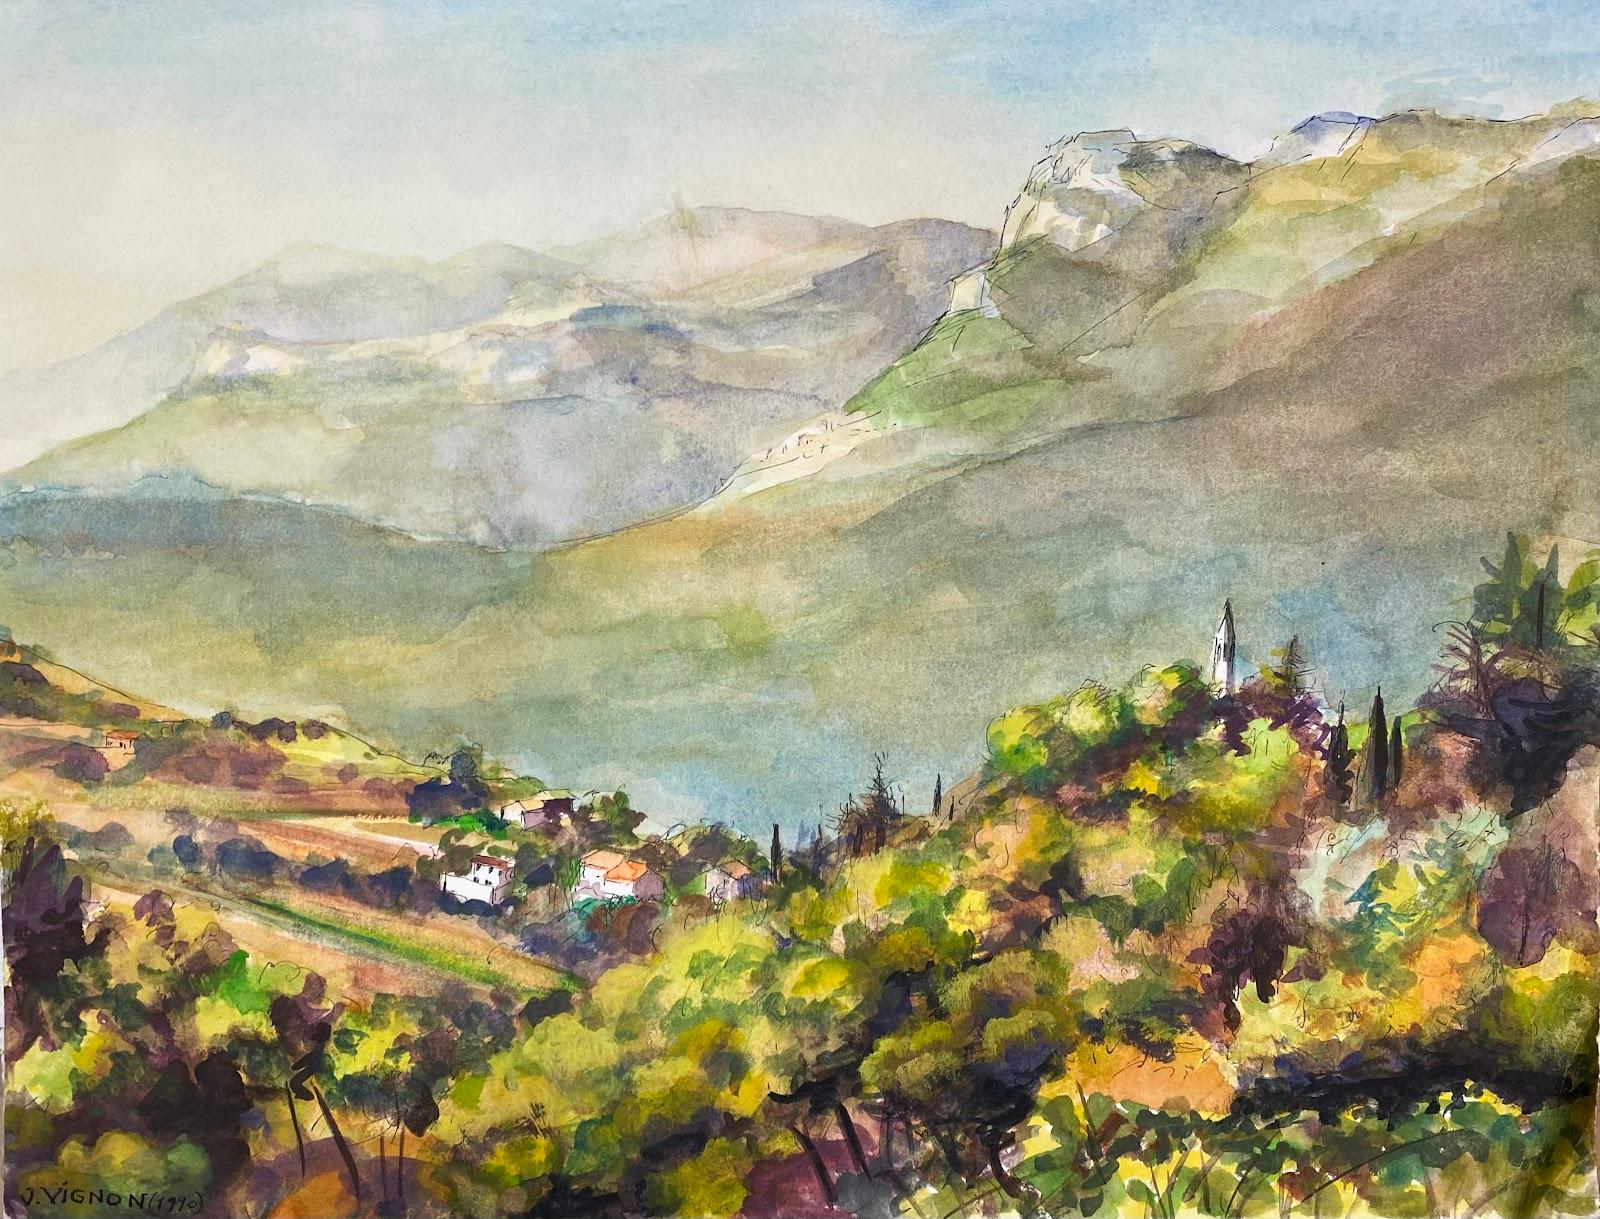 Josine Vignon Landscape Art – Postimpressionistisches Aquarellgemälde „Die Hügel von Baou De Saint-Jeannet“, Nizza